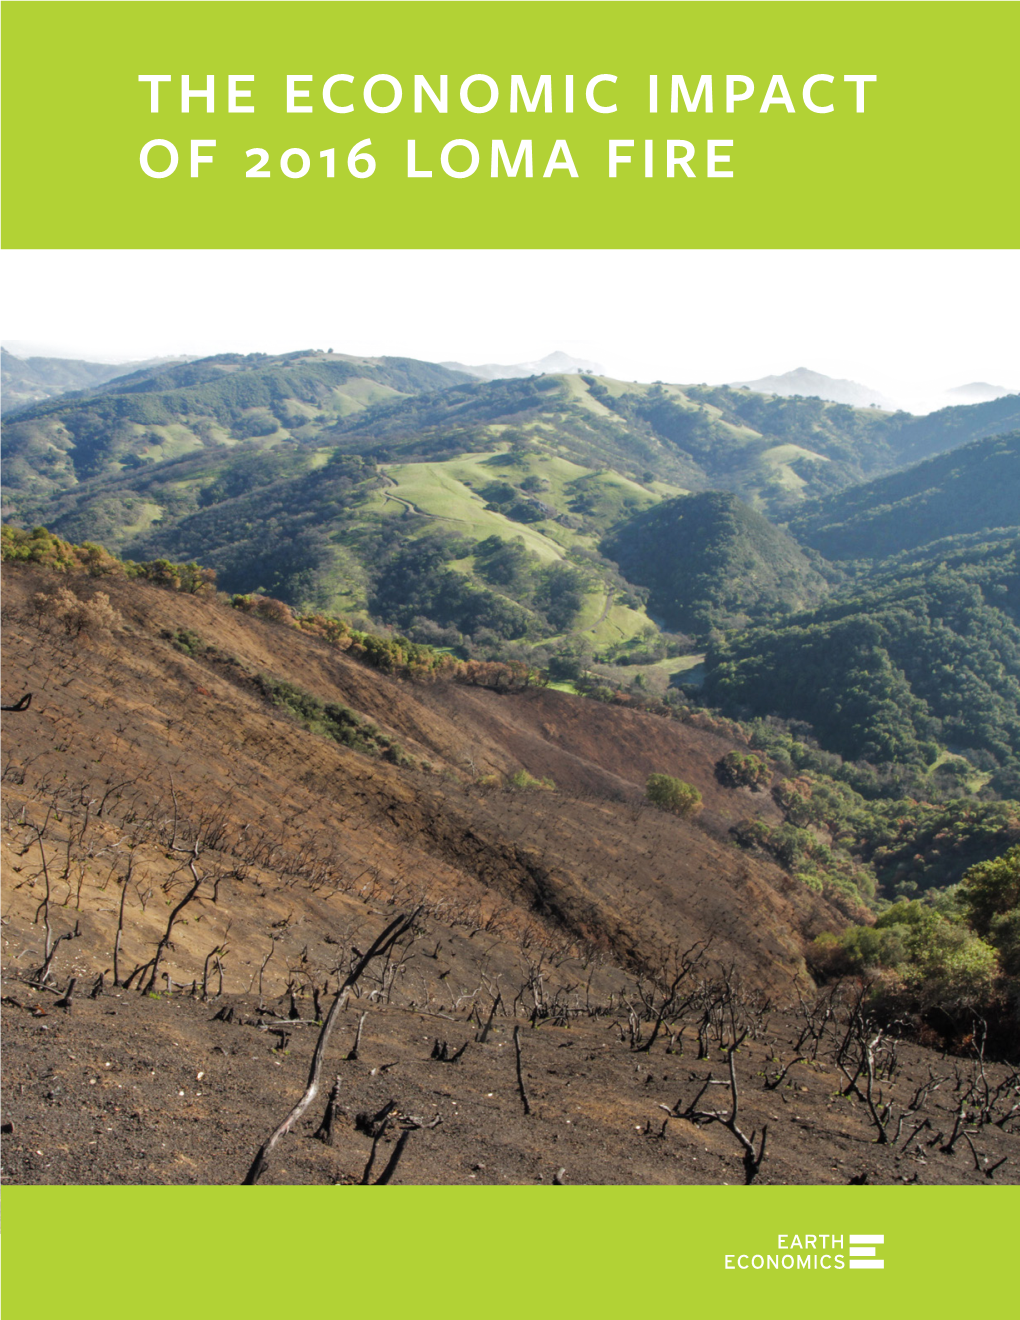 THE ECONOMIC IMPACT of 2016 LOMA FIRE the Economic Impact of the 2016 Loma Fire